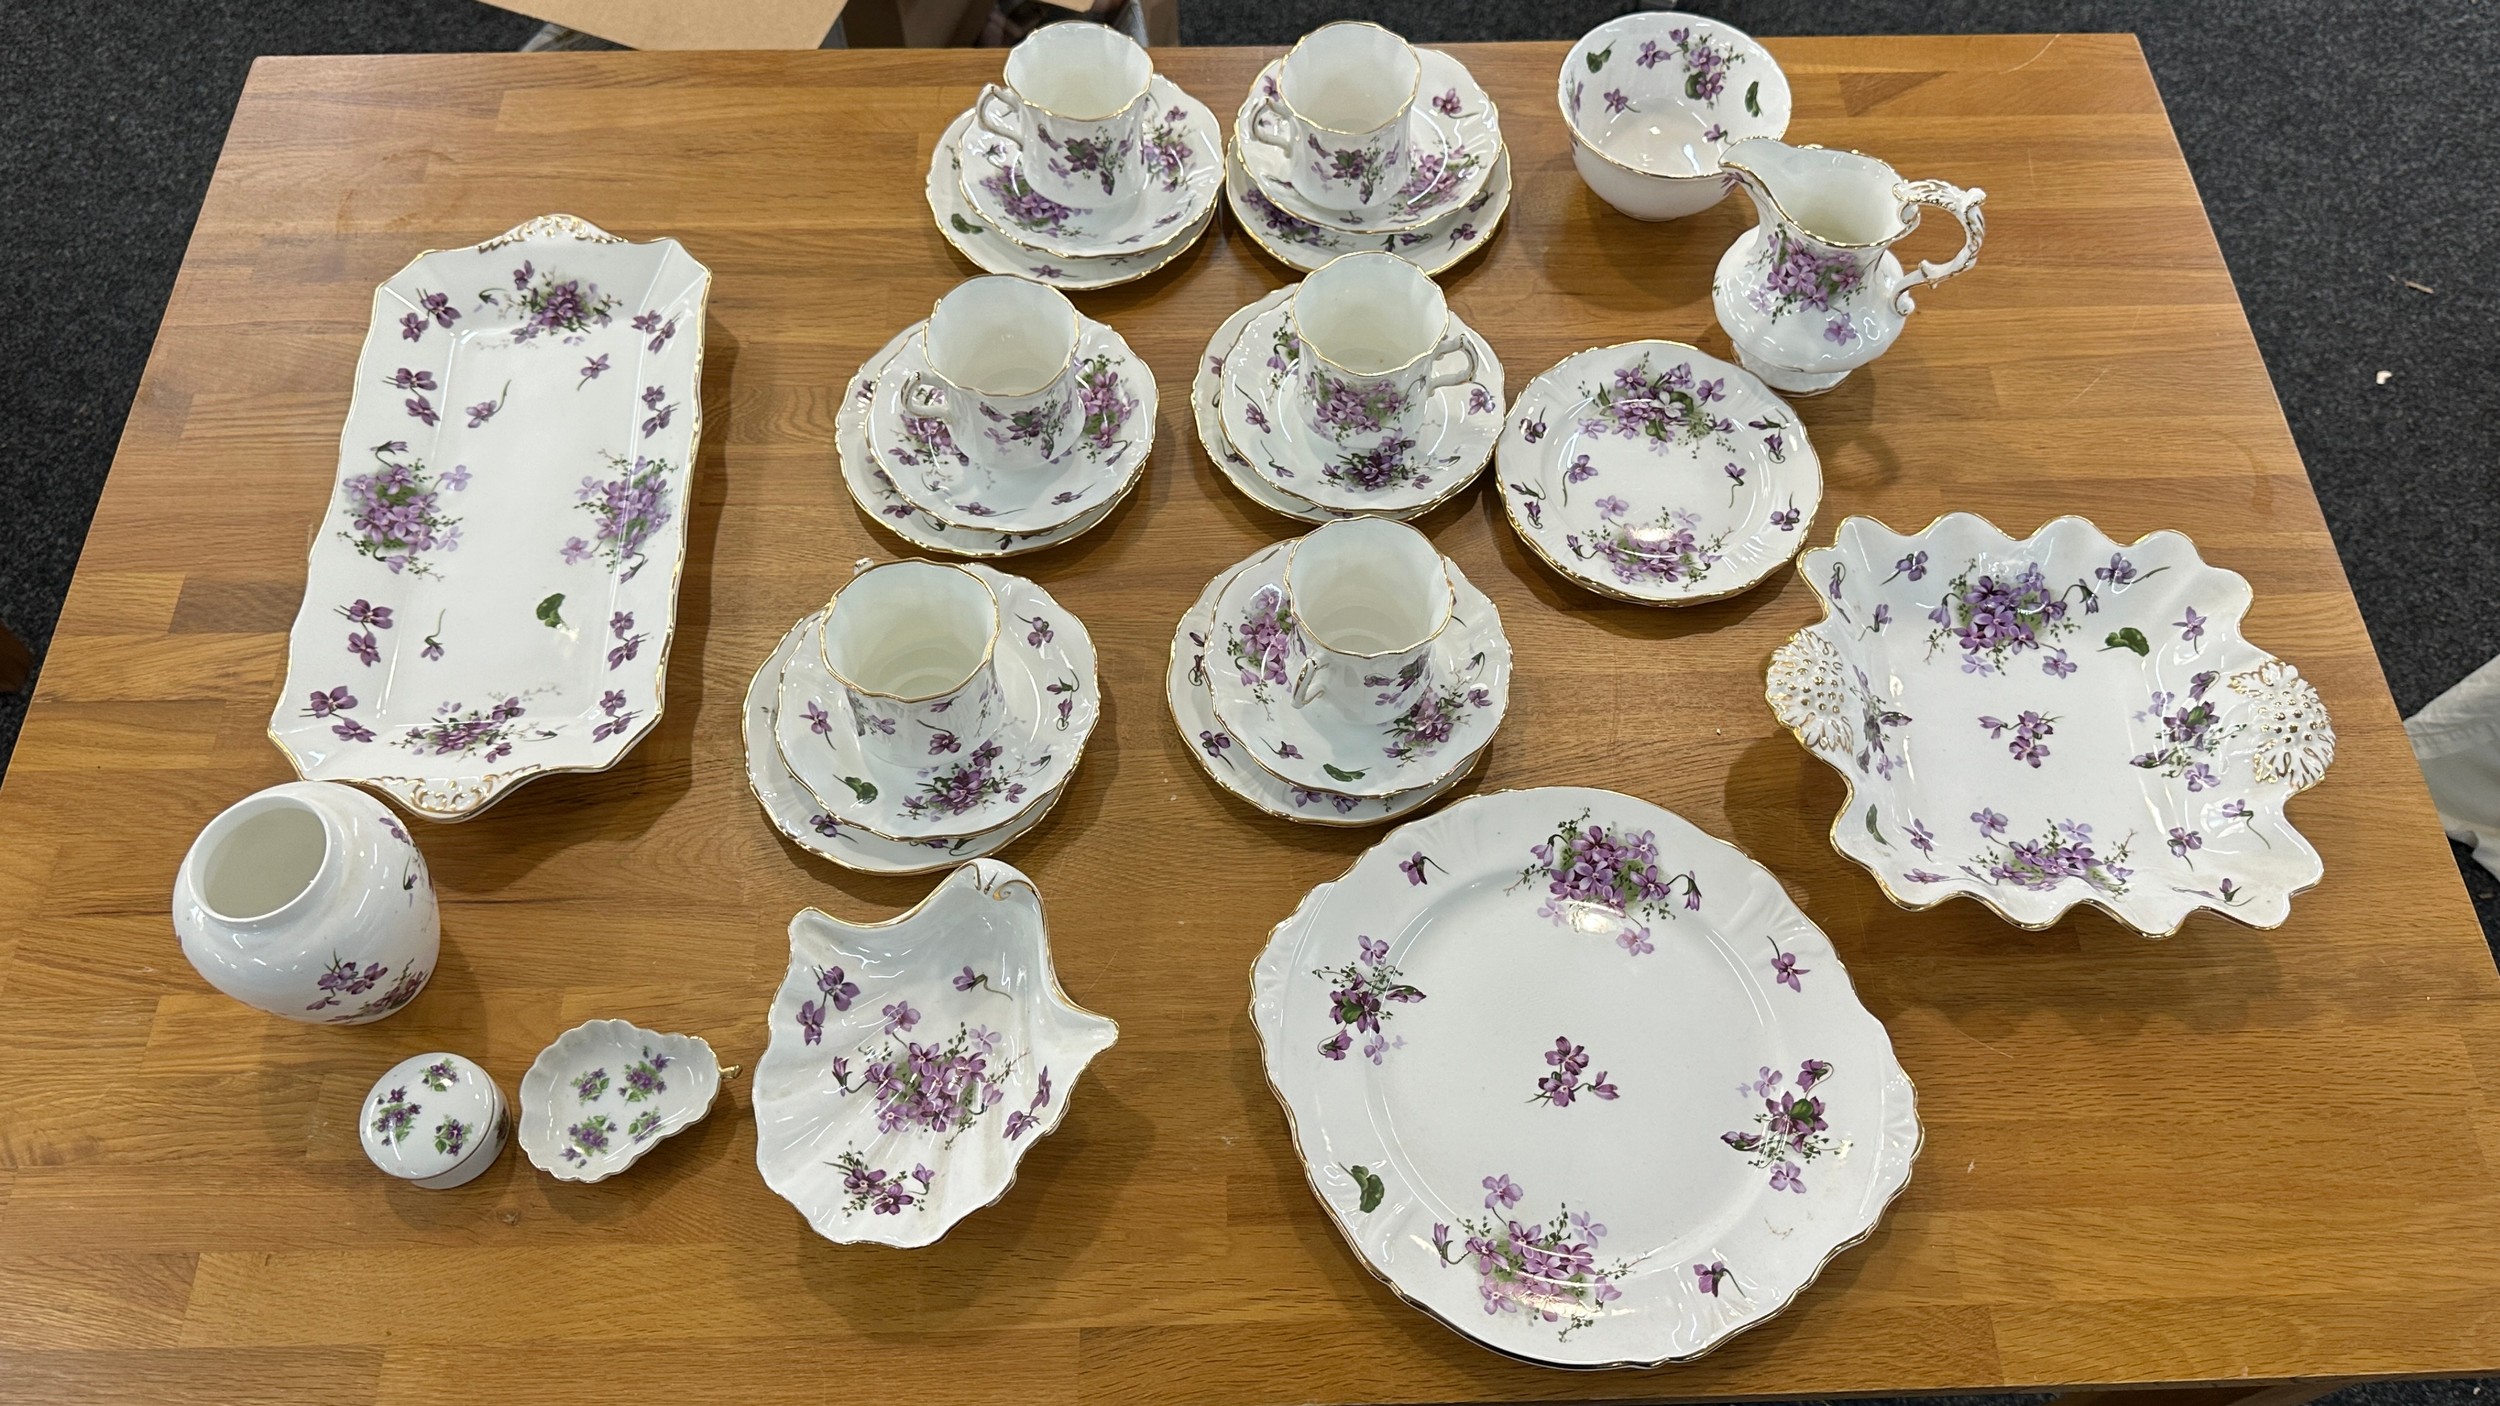 Six piece part Hammersley tea service victorian violets includes cups, saucers, milk jug etc - Image 2 of 4